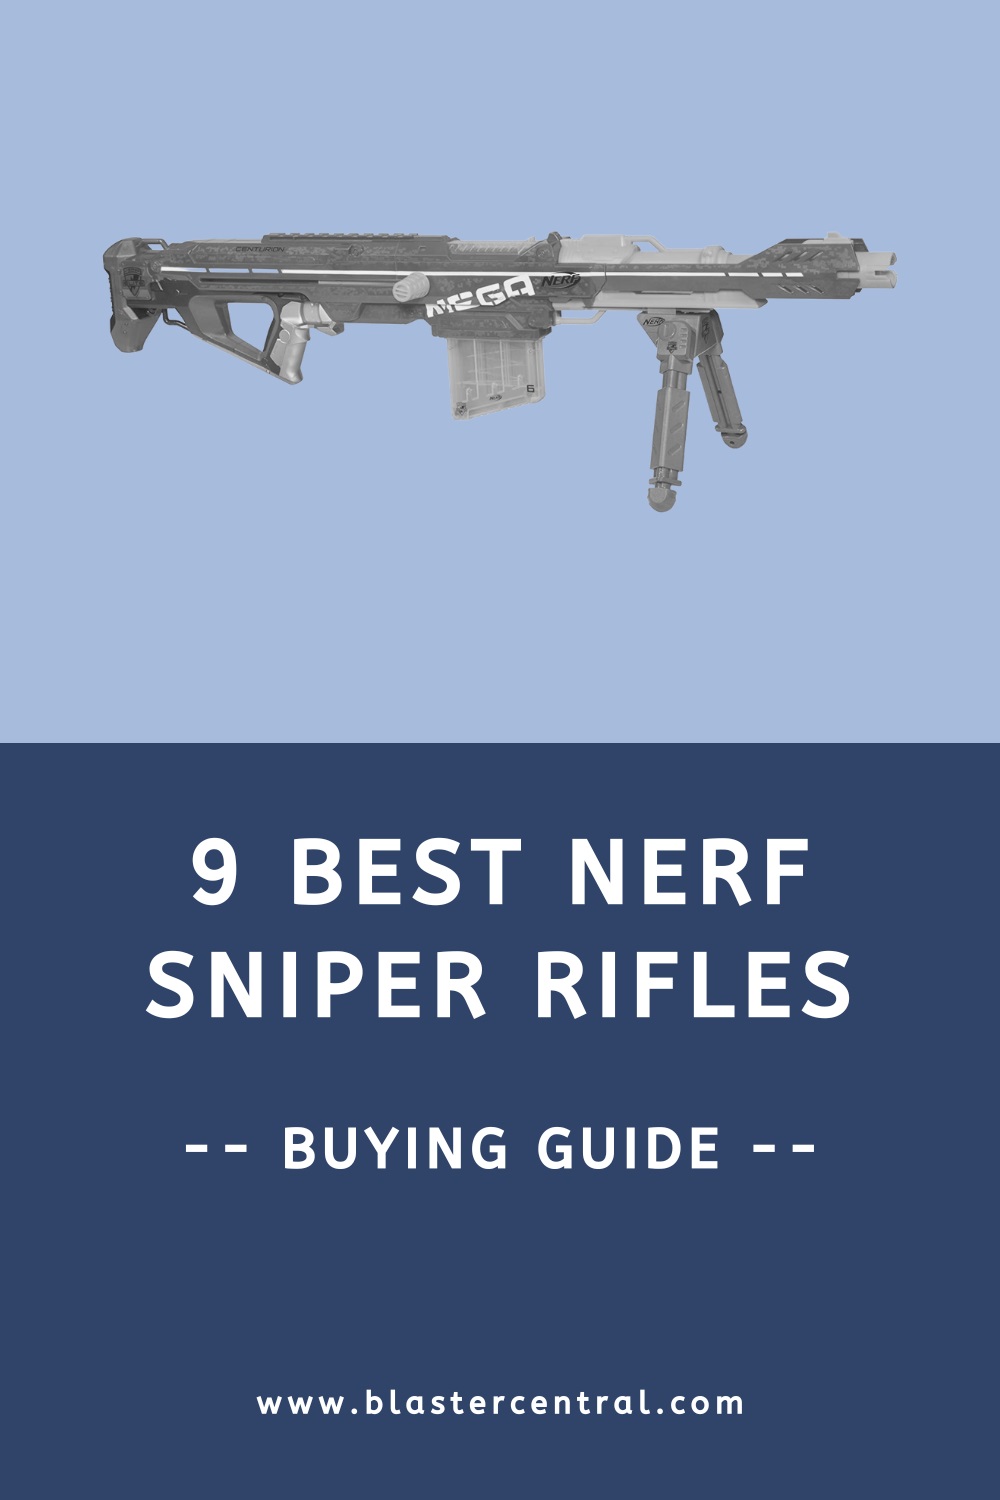 Shop Nerf Gun Sniper Mega Guns online